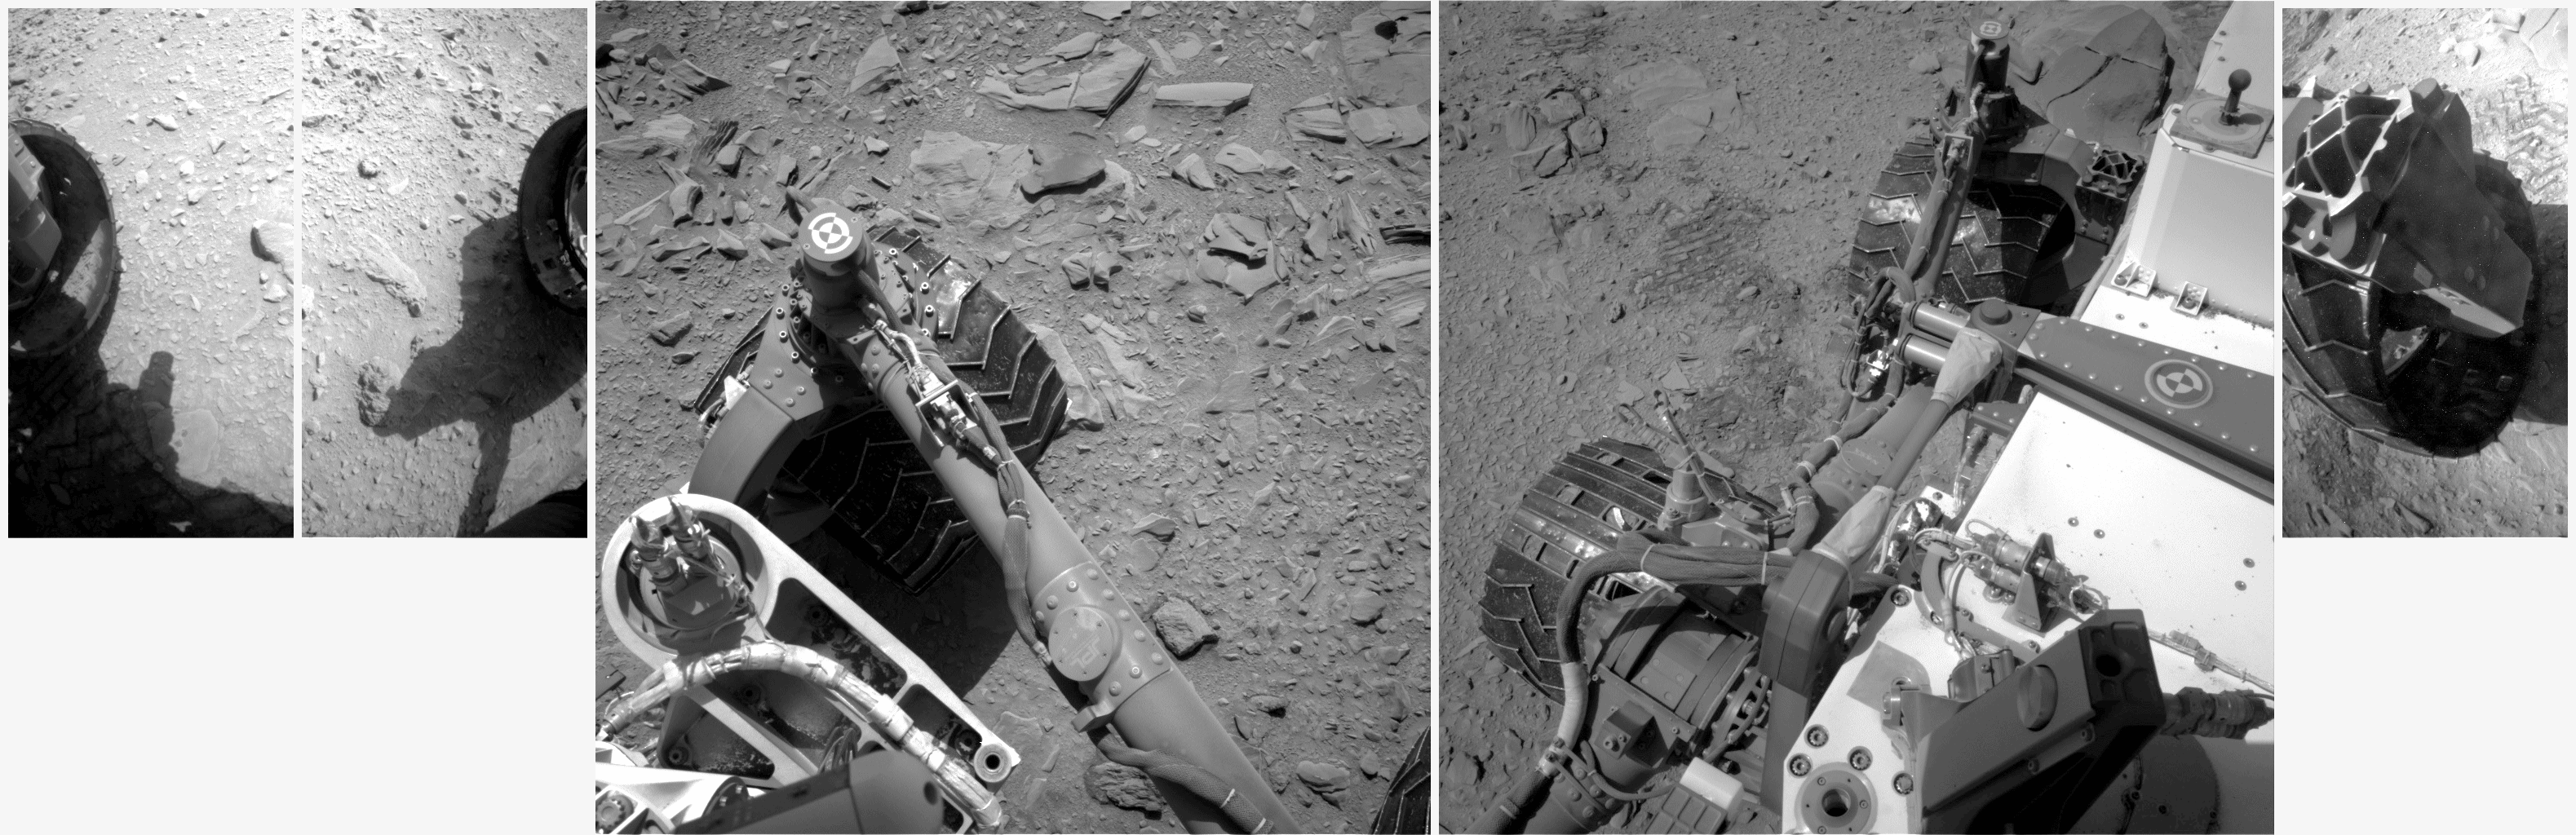 Curiosity monitors wheels during a drive, sol 474